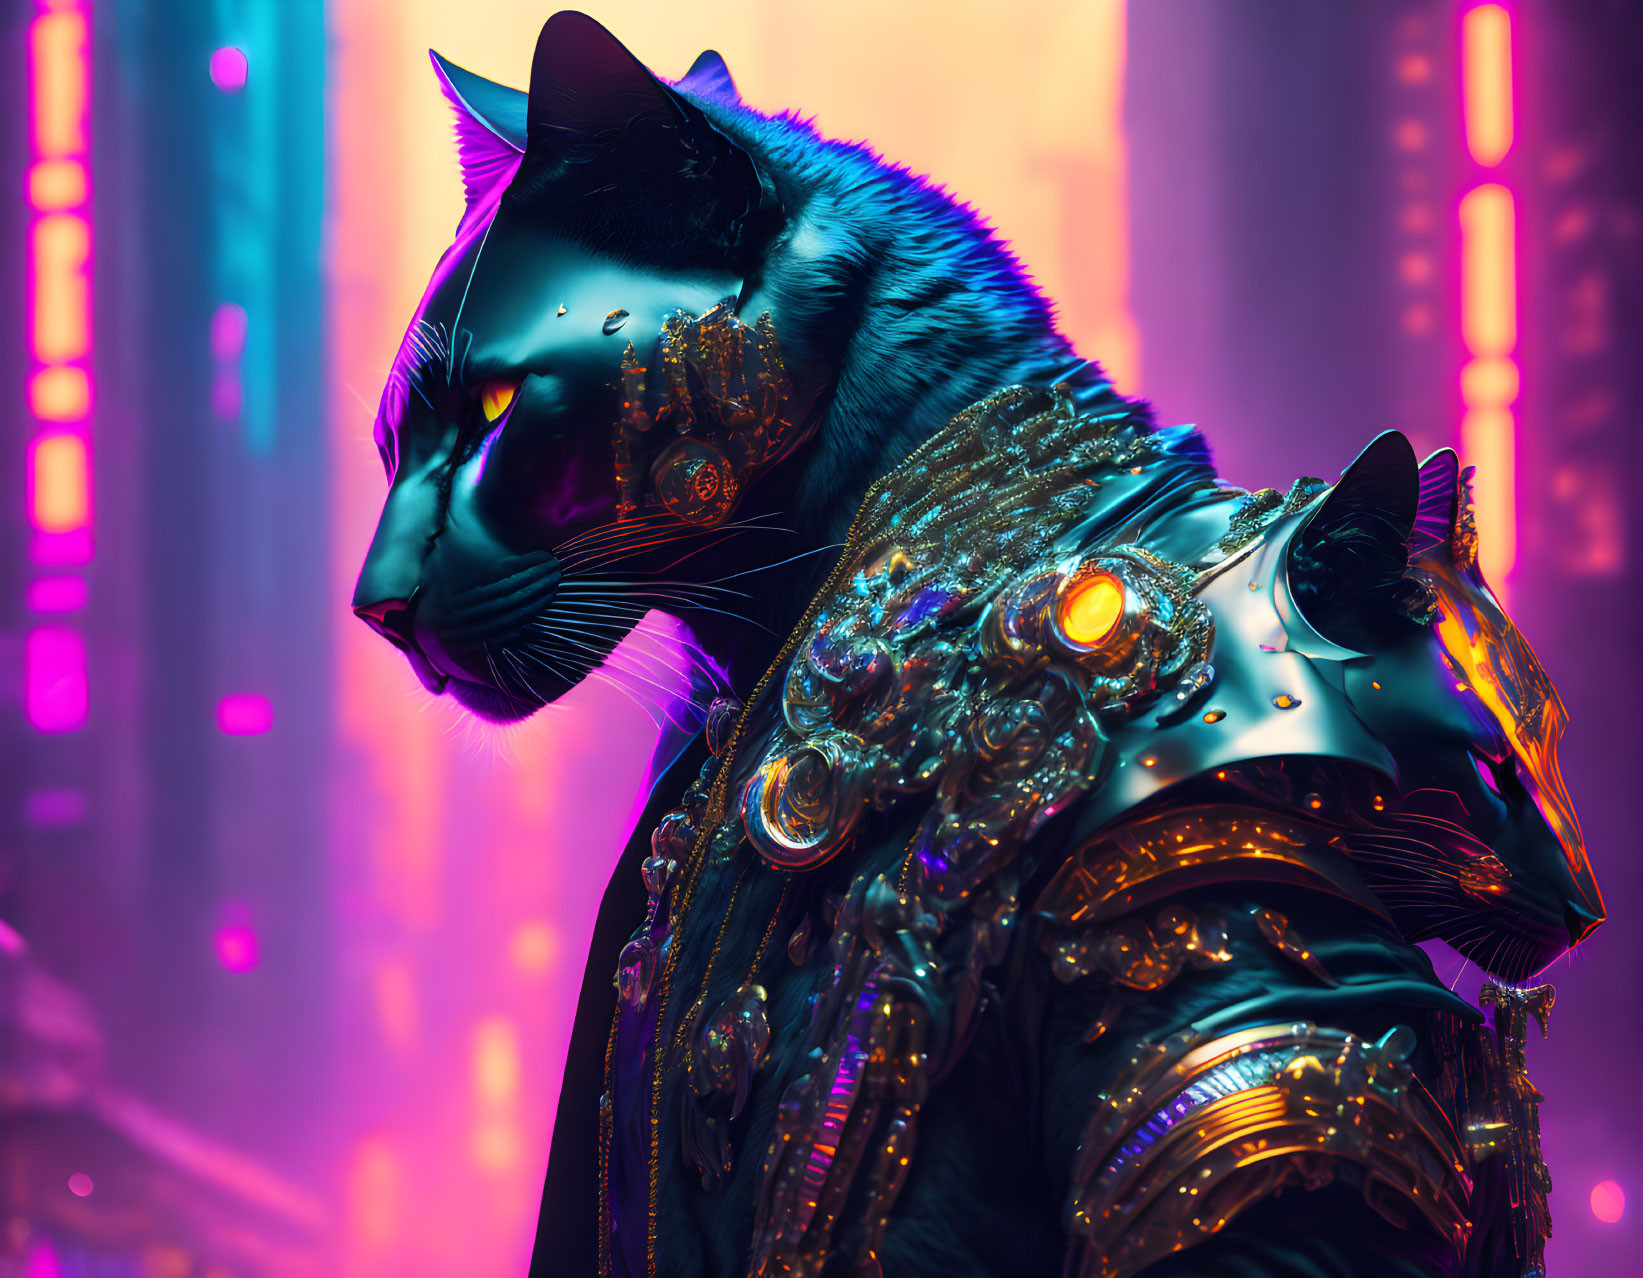 Cyberpunk panther